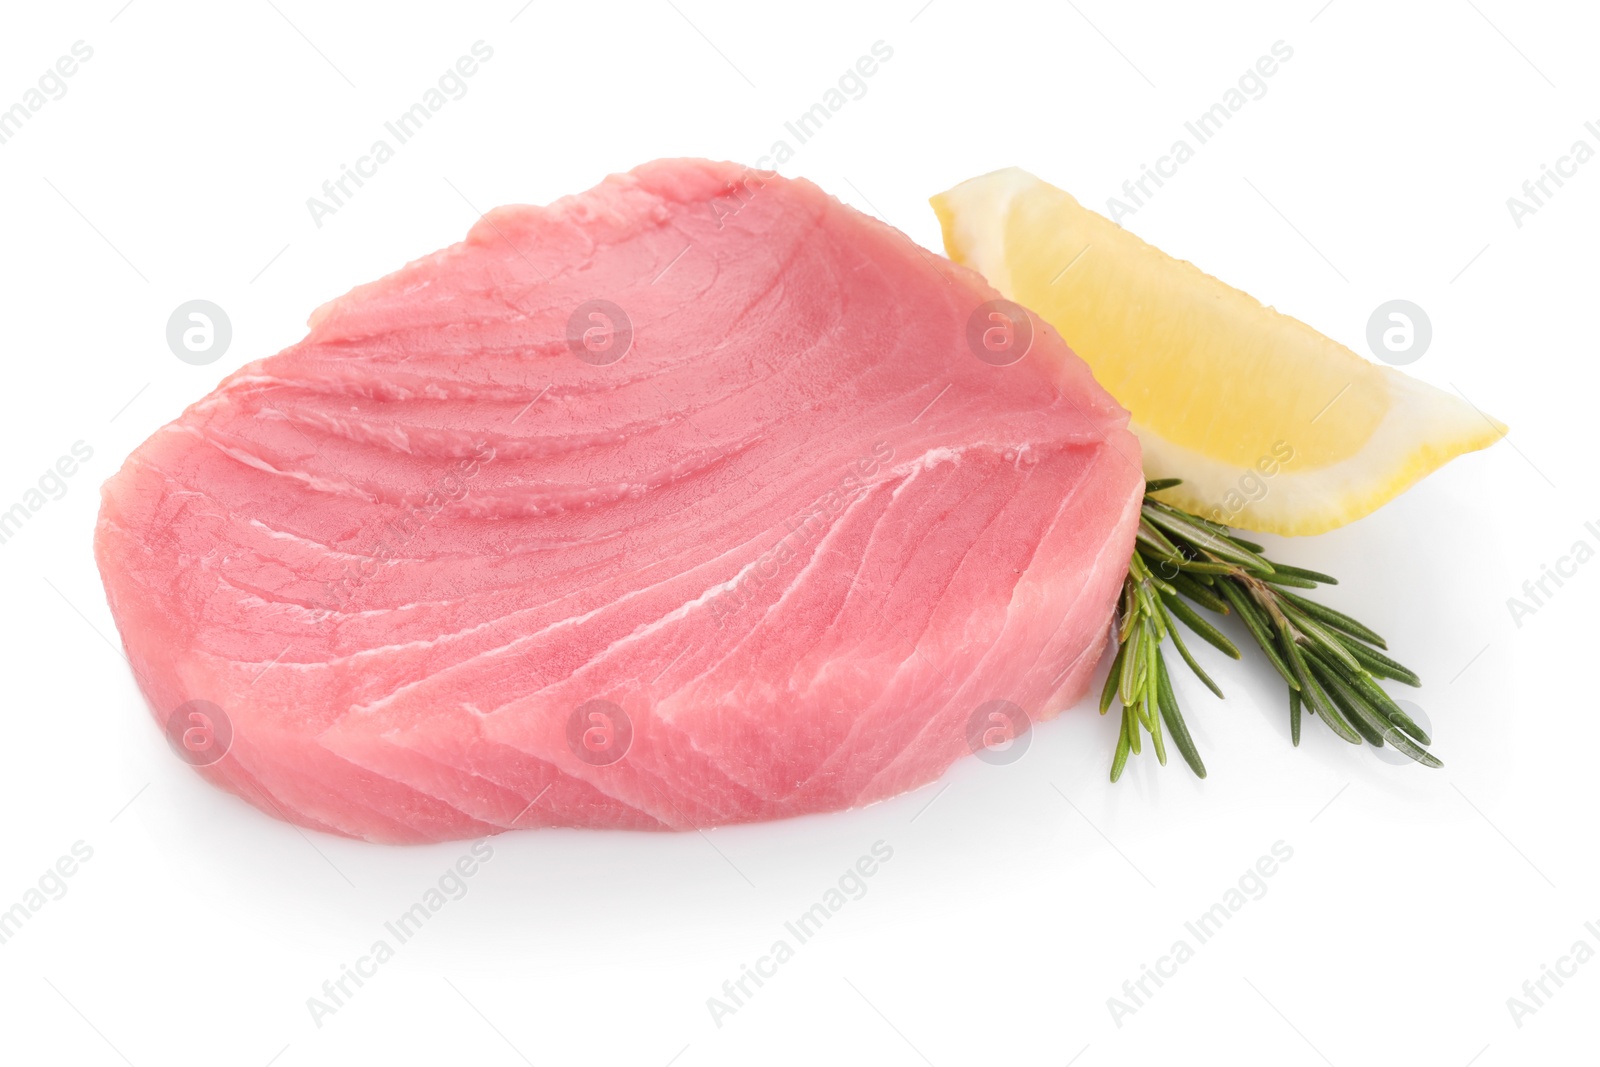 Photo of Raw tuna fillet, lemon wedge and rosemary on white background